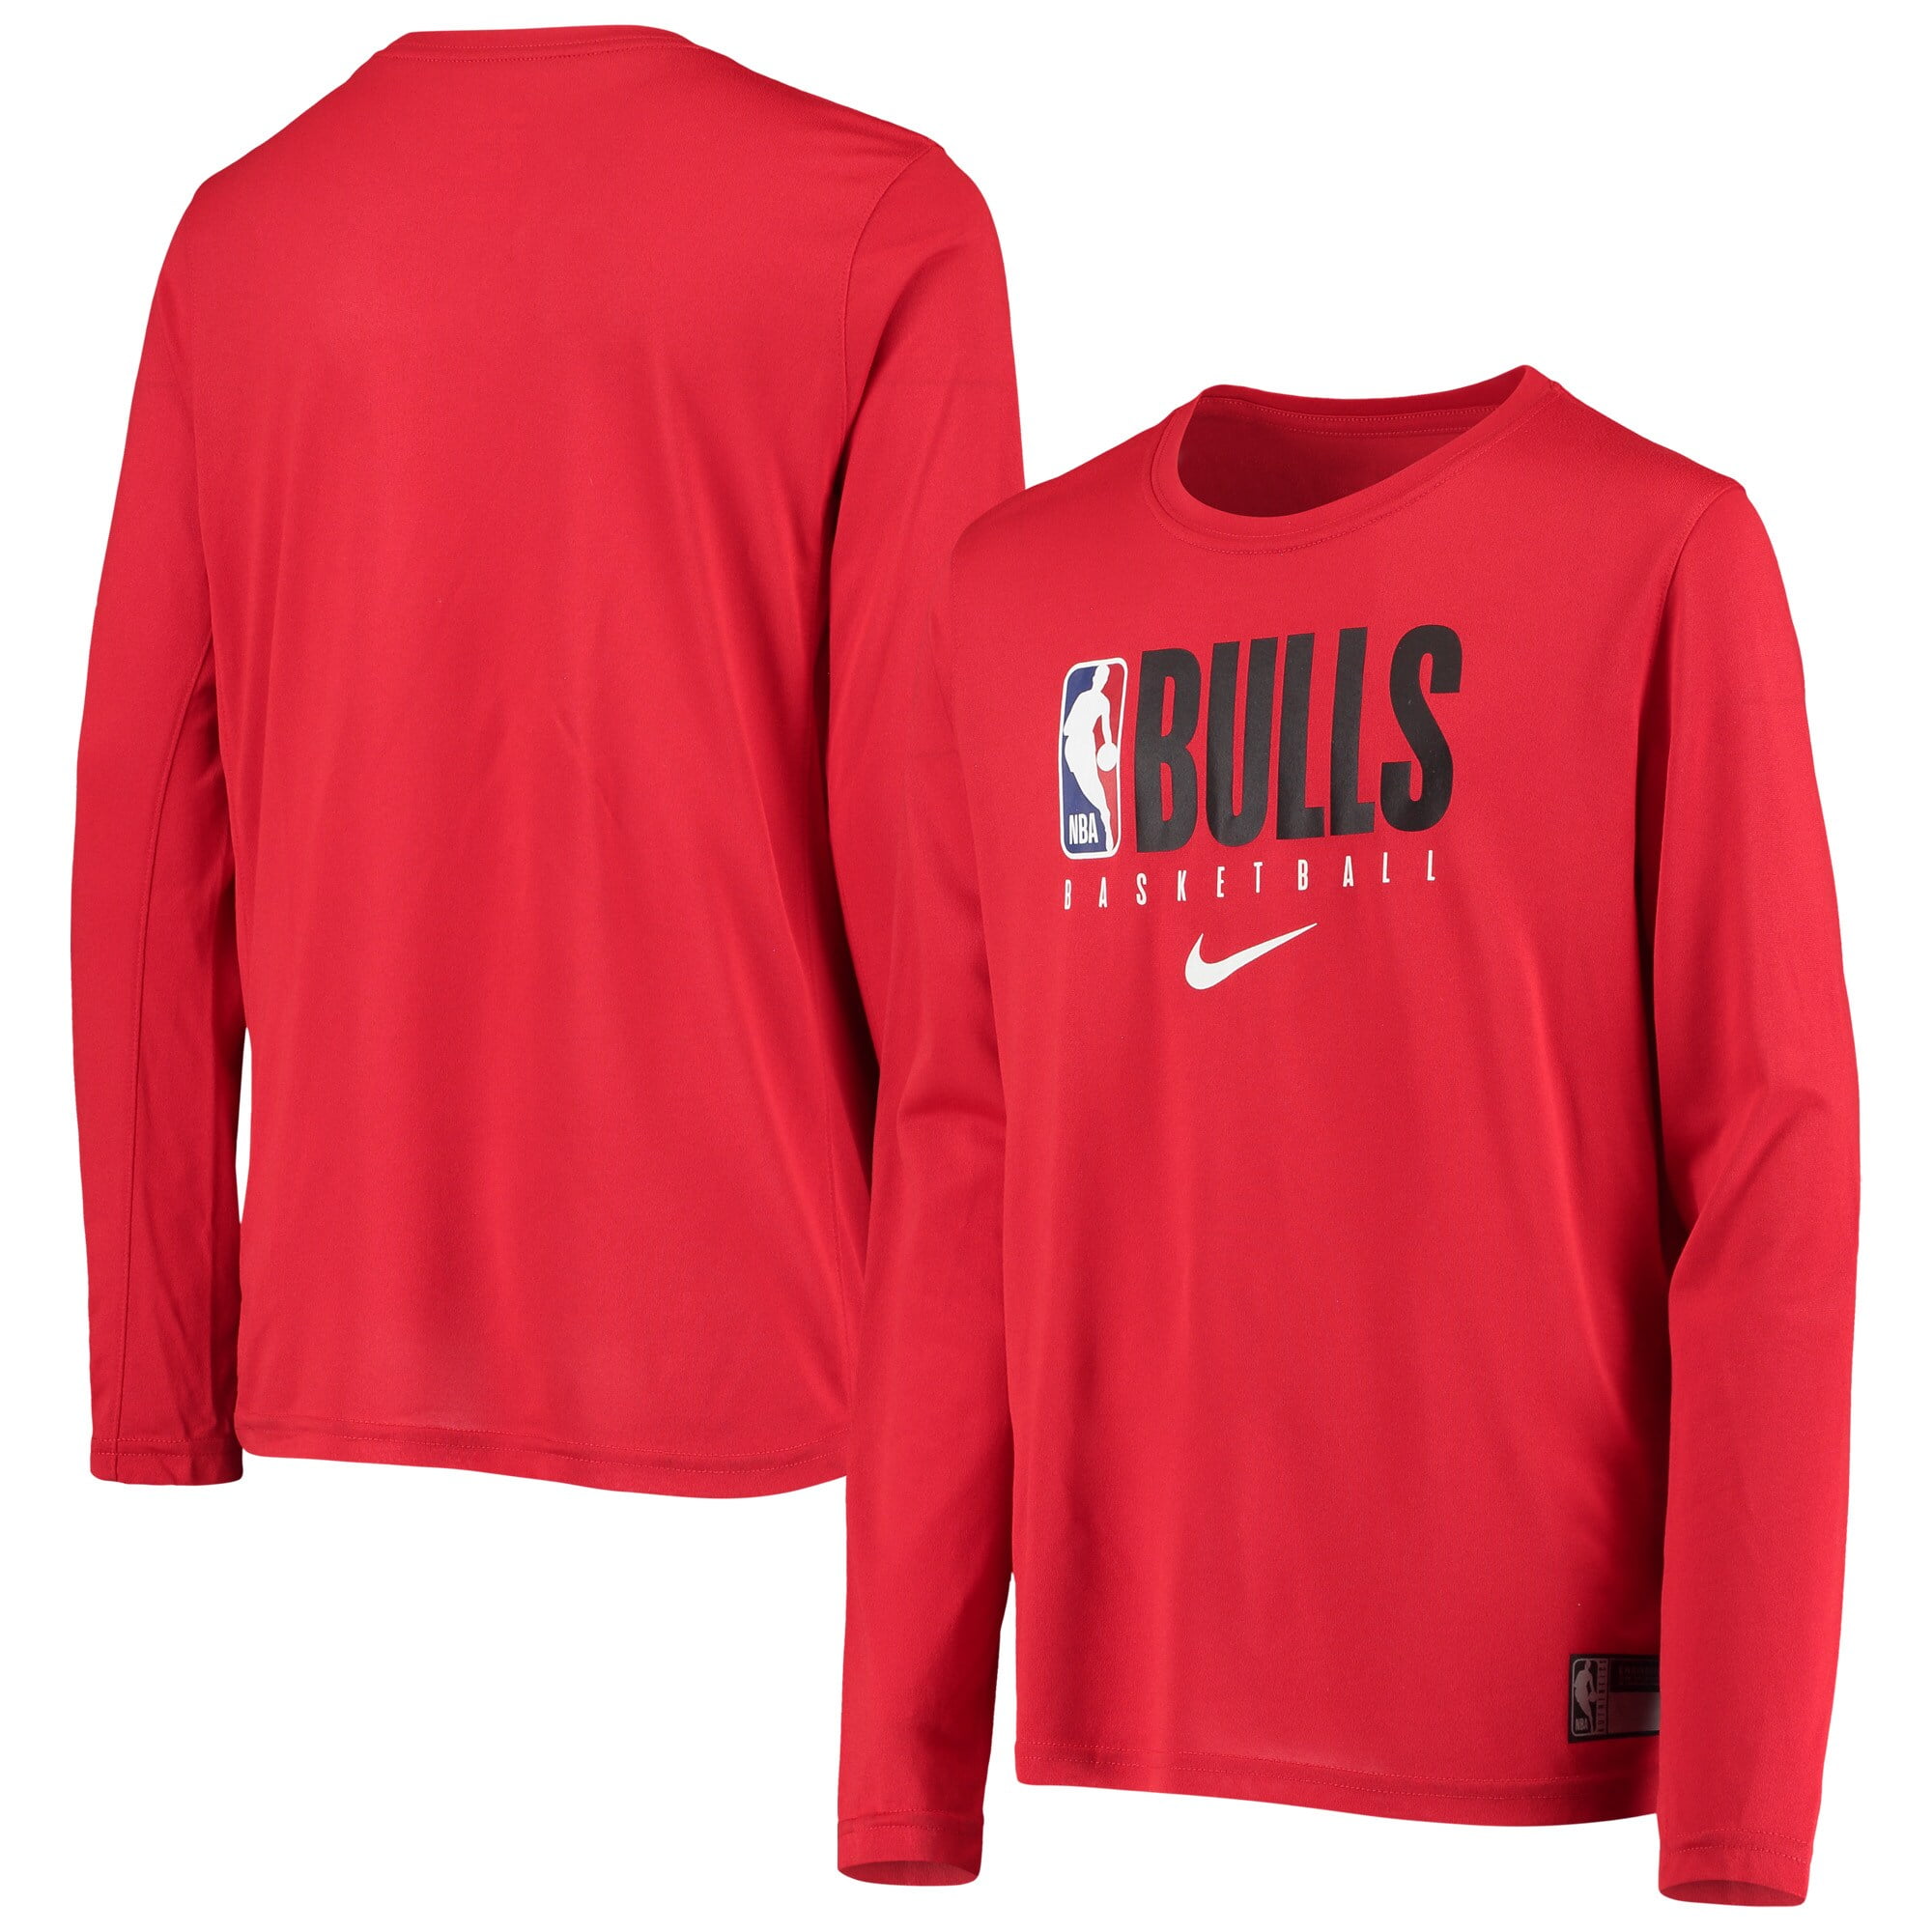 bulls nike shirt